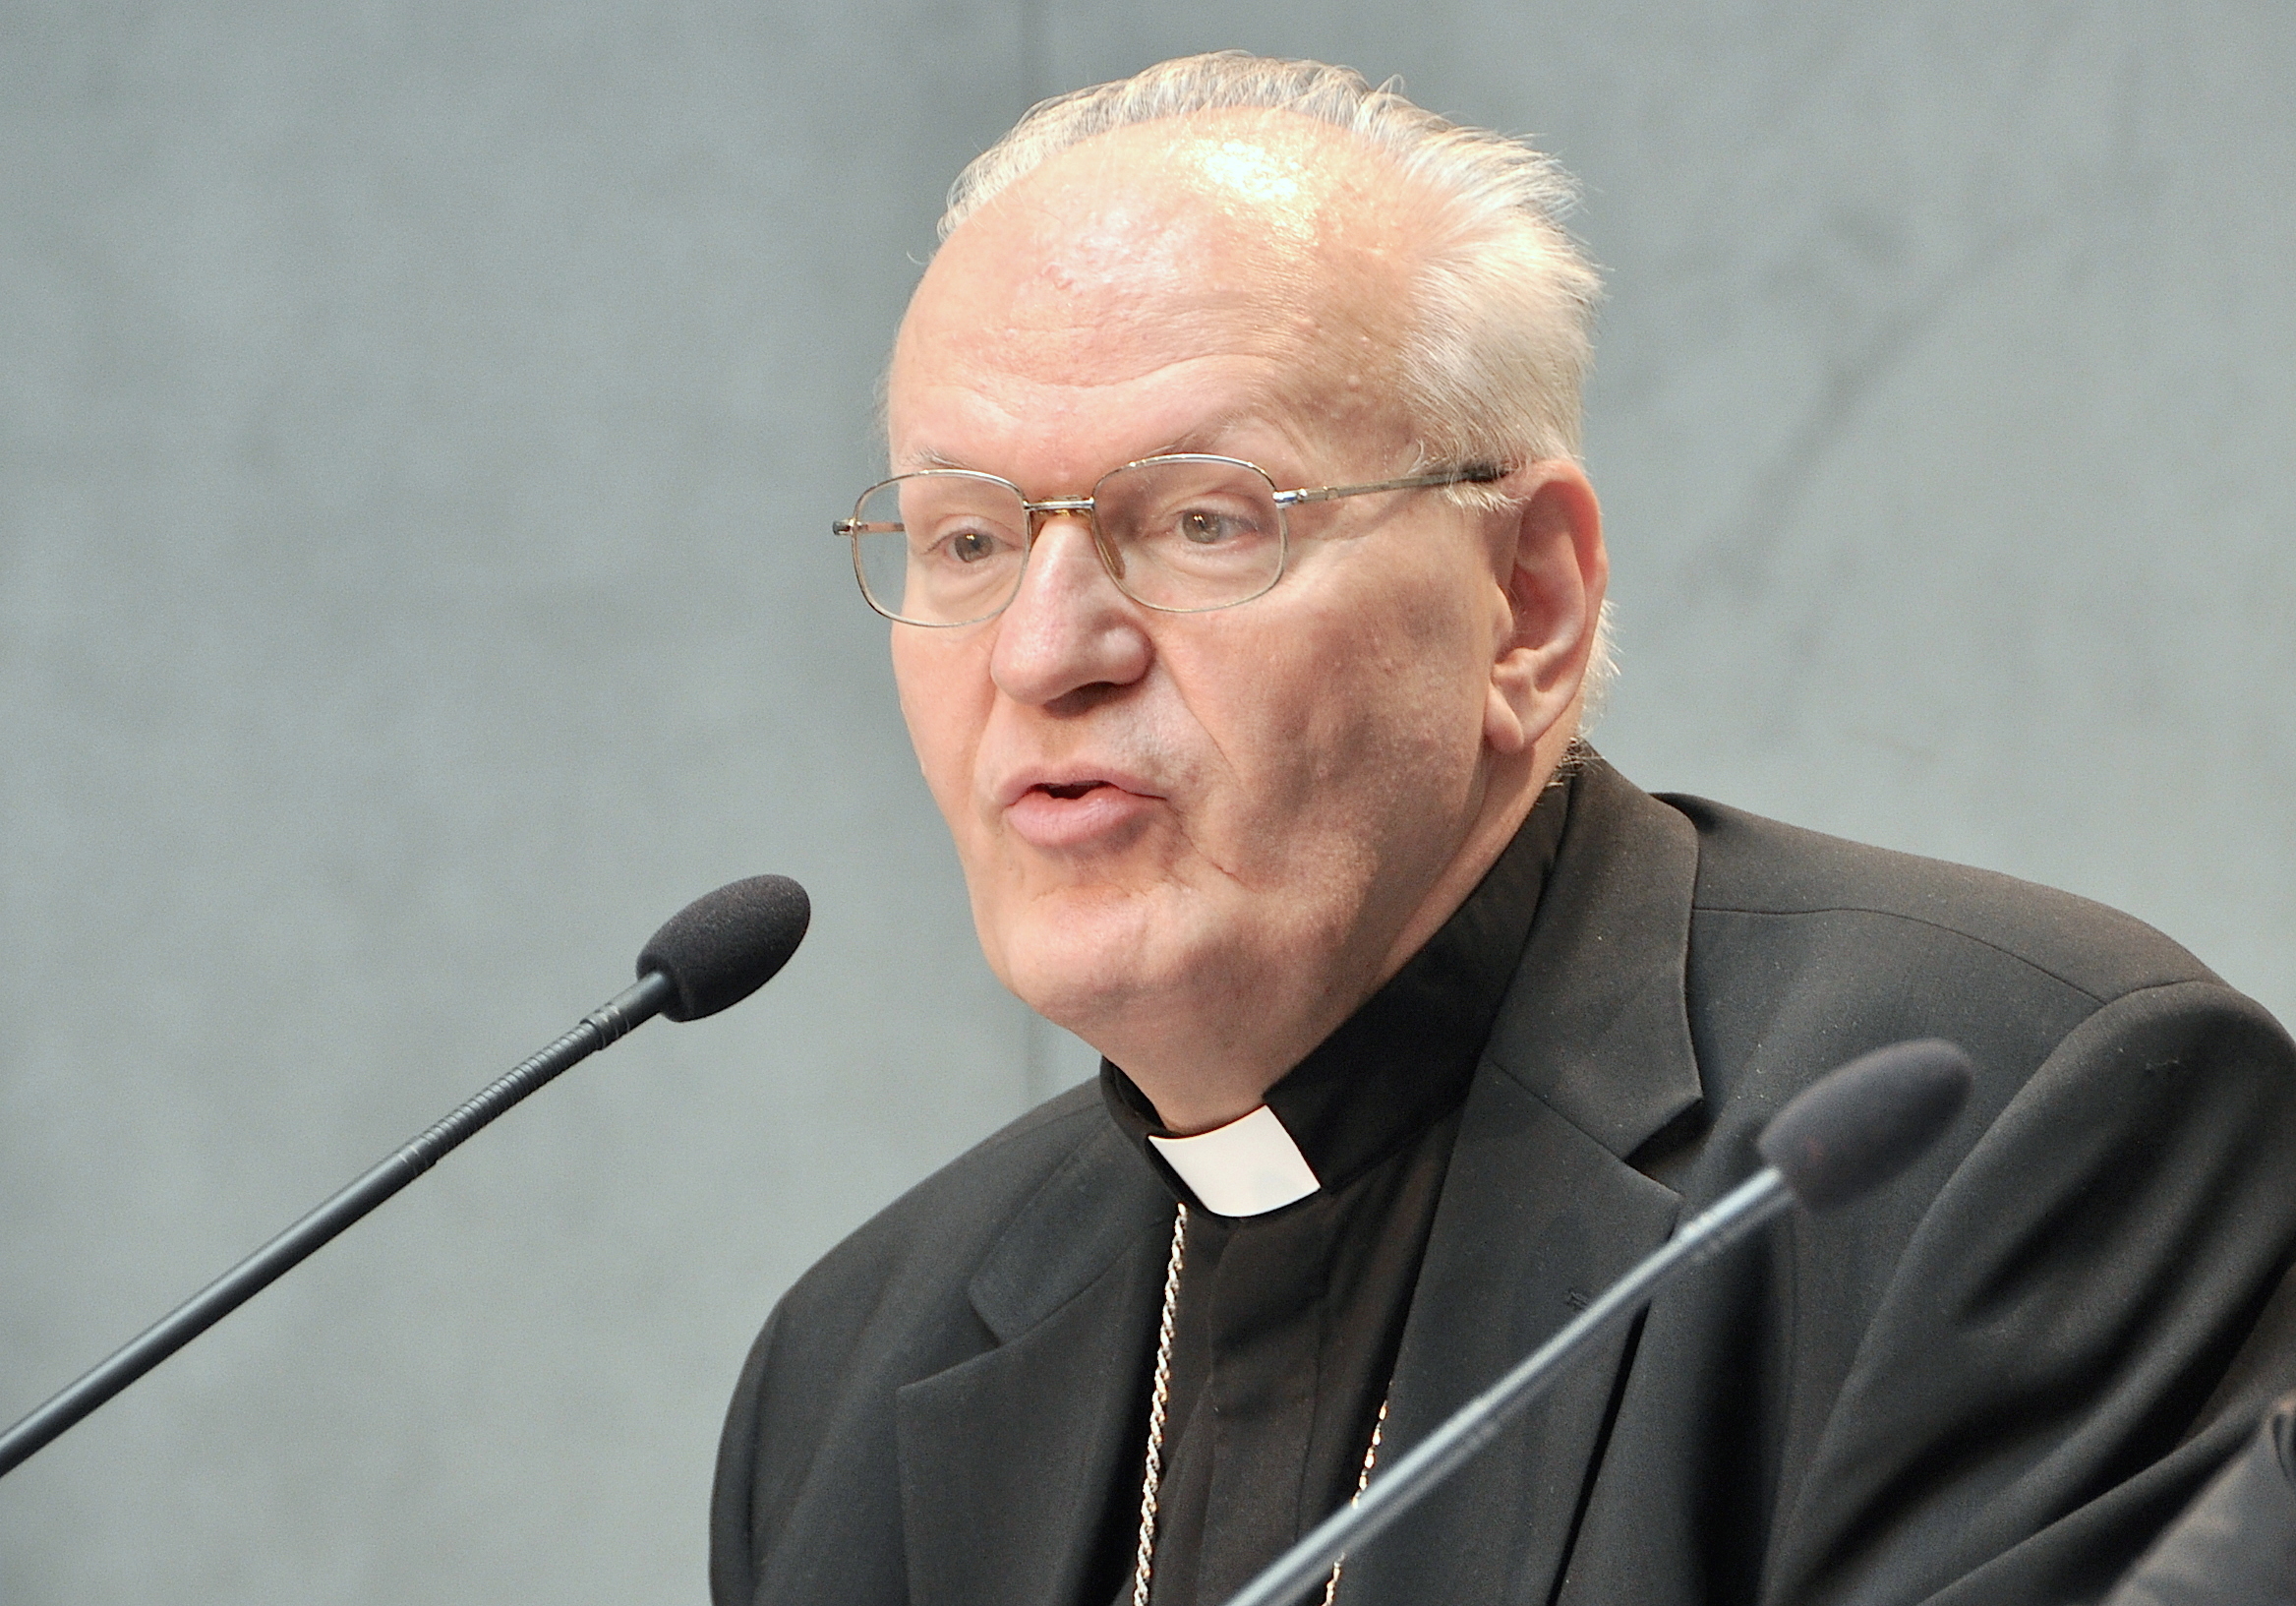 Cardinal Peter Erdo during the presentation of instrumentum laboris in the vatican press room - 23 June 2015